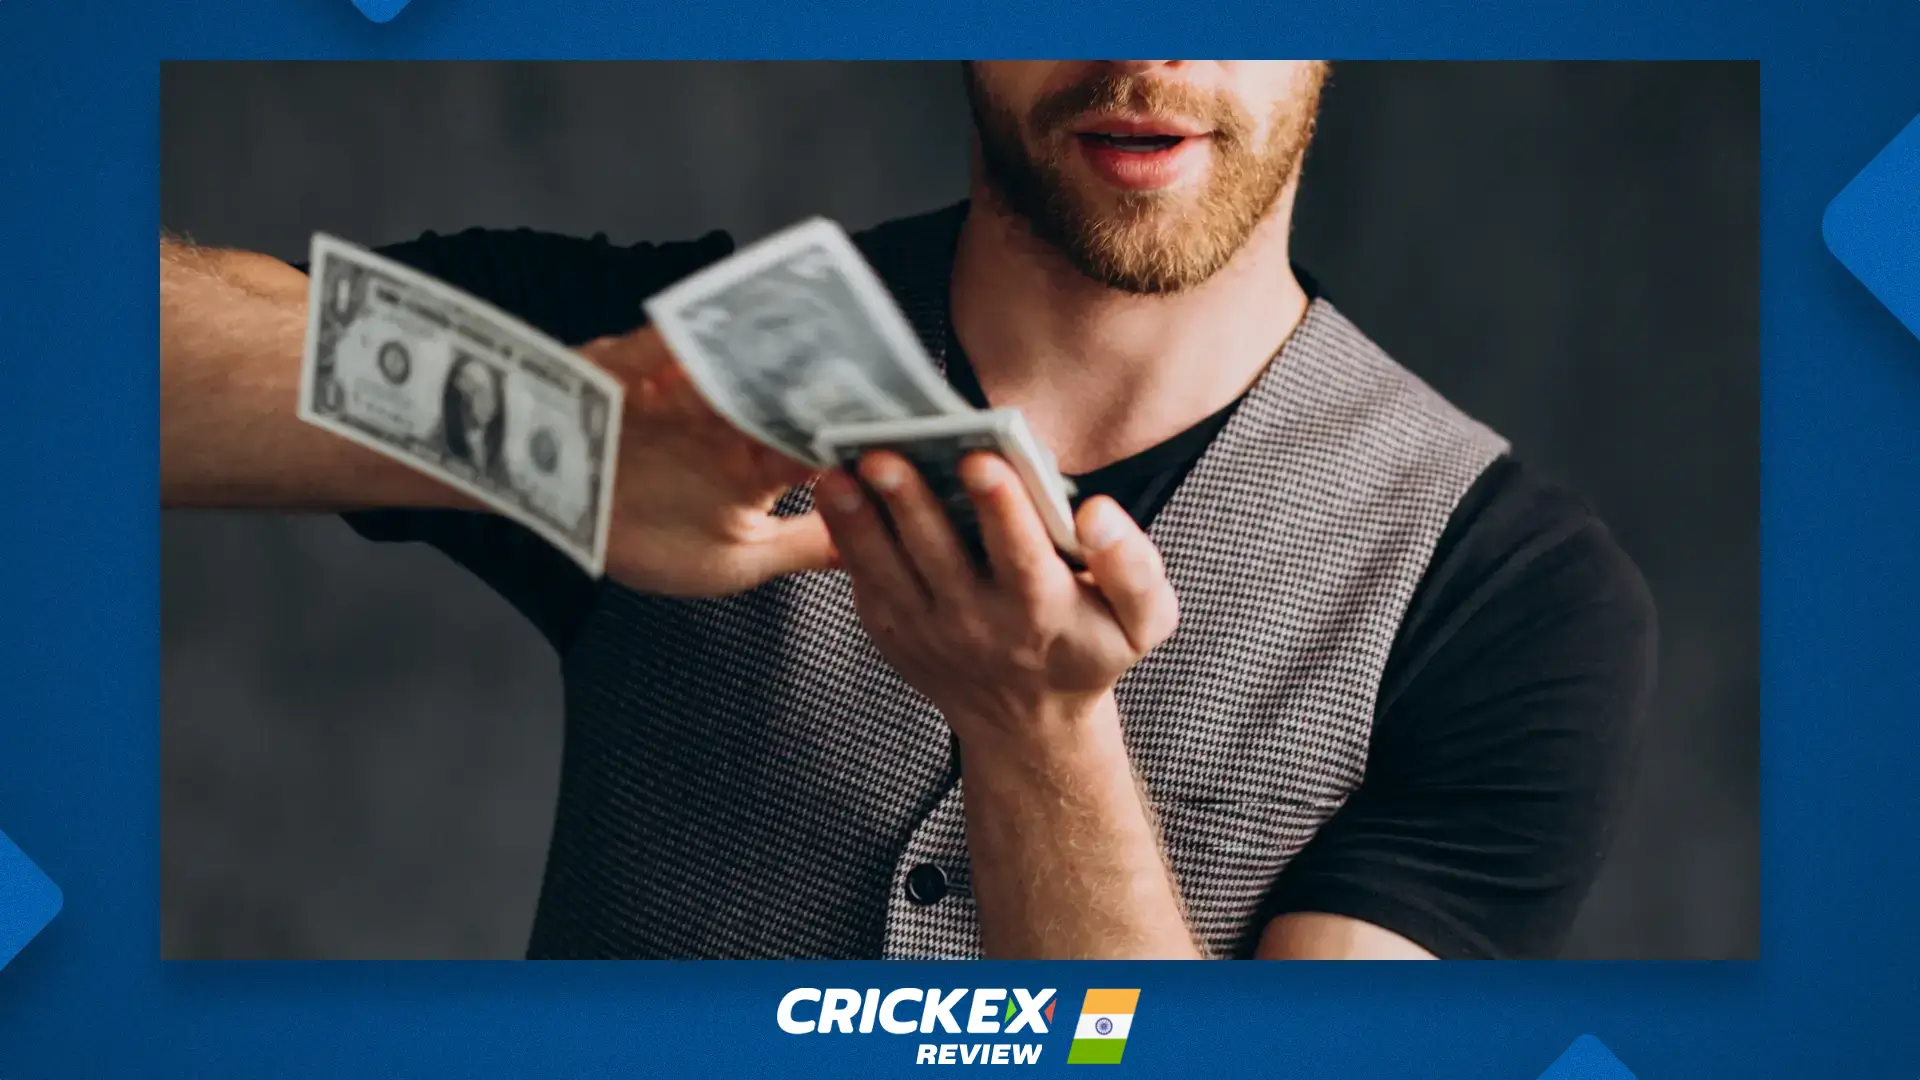 Weekly monday cashback bonus at Crickex website